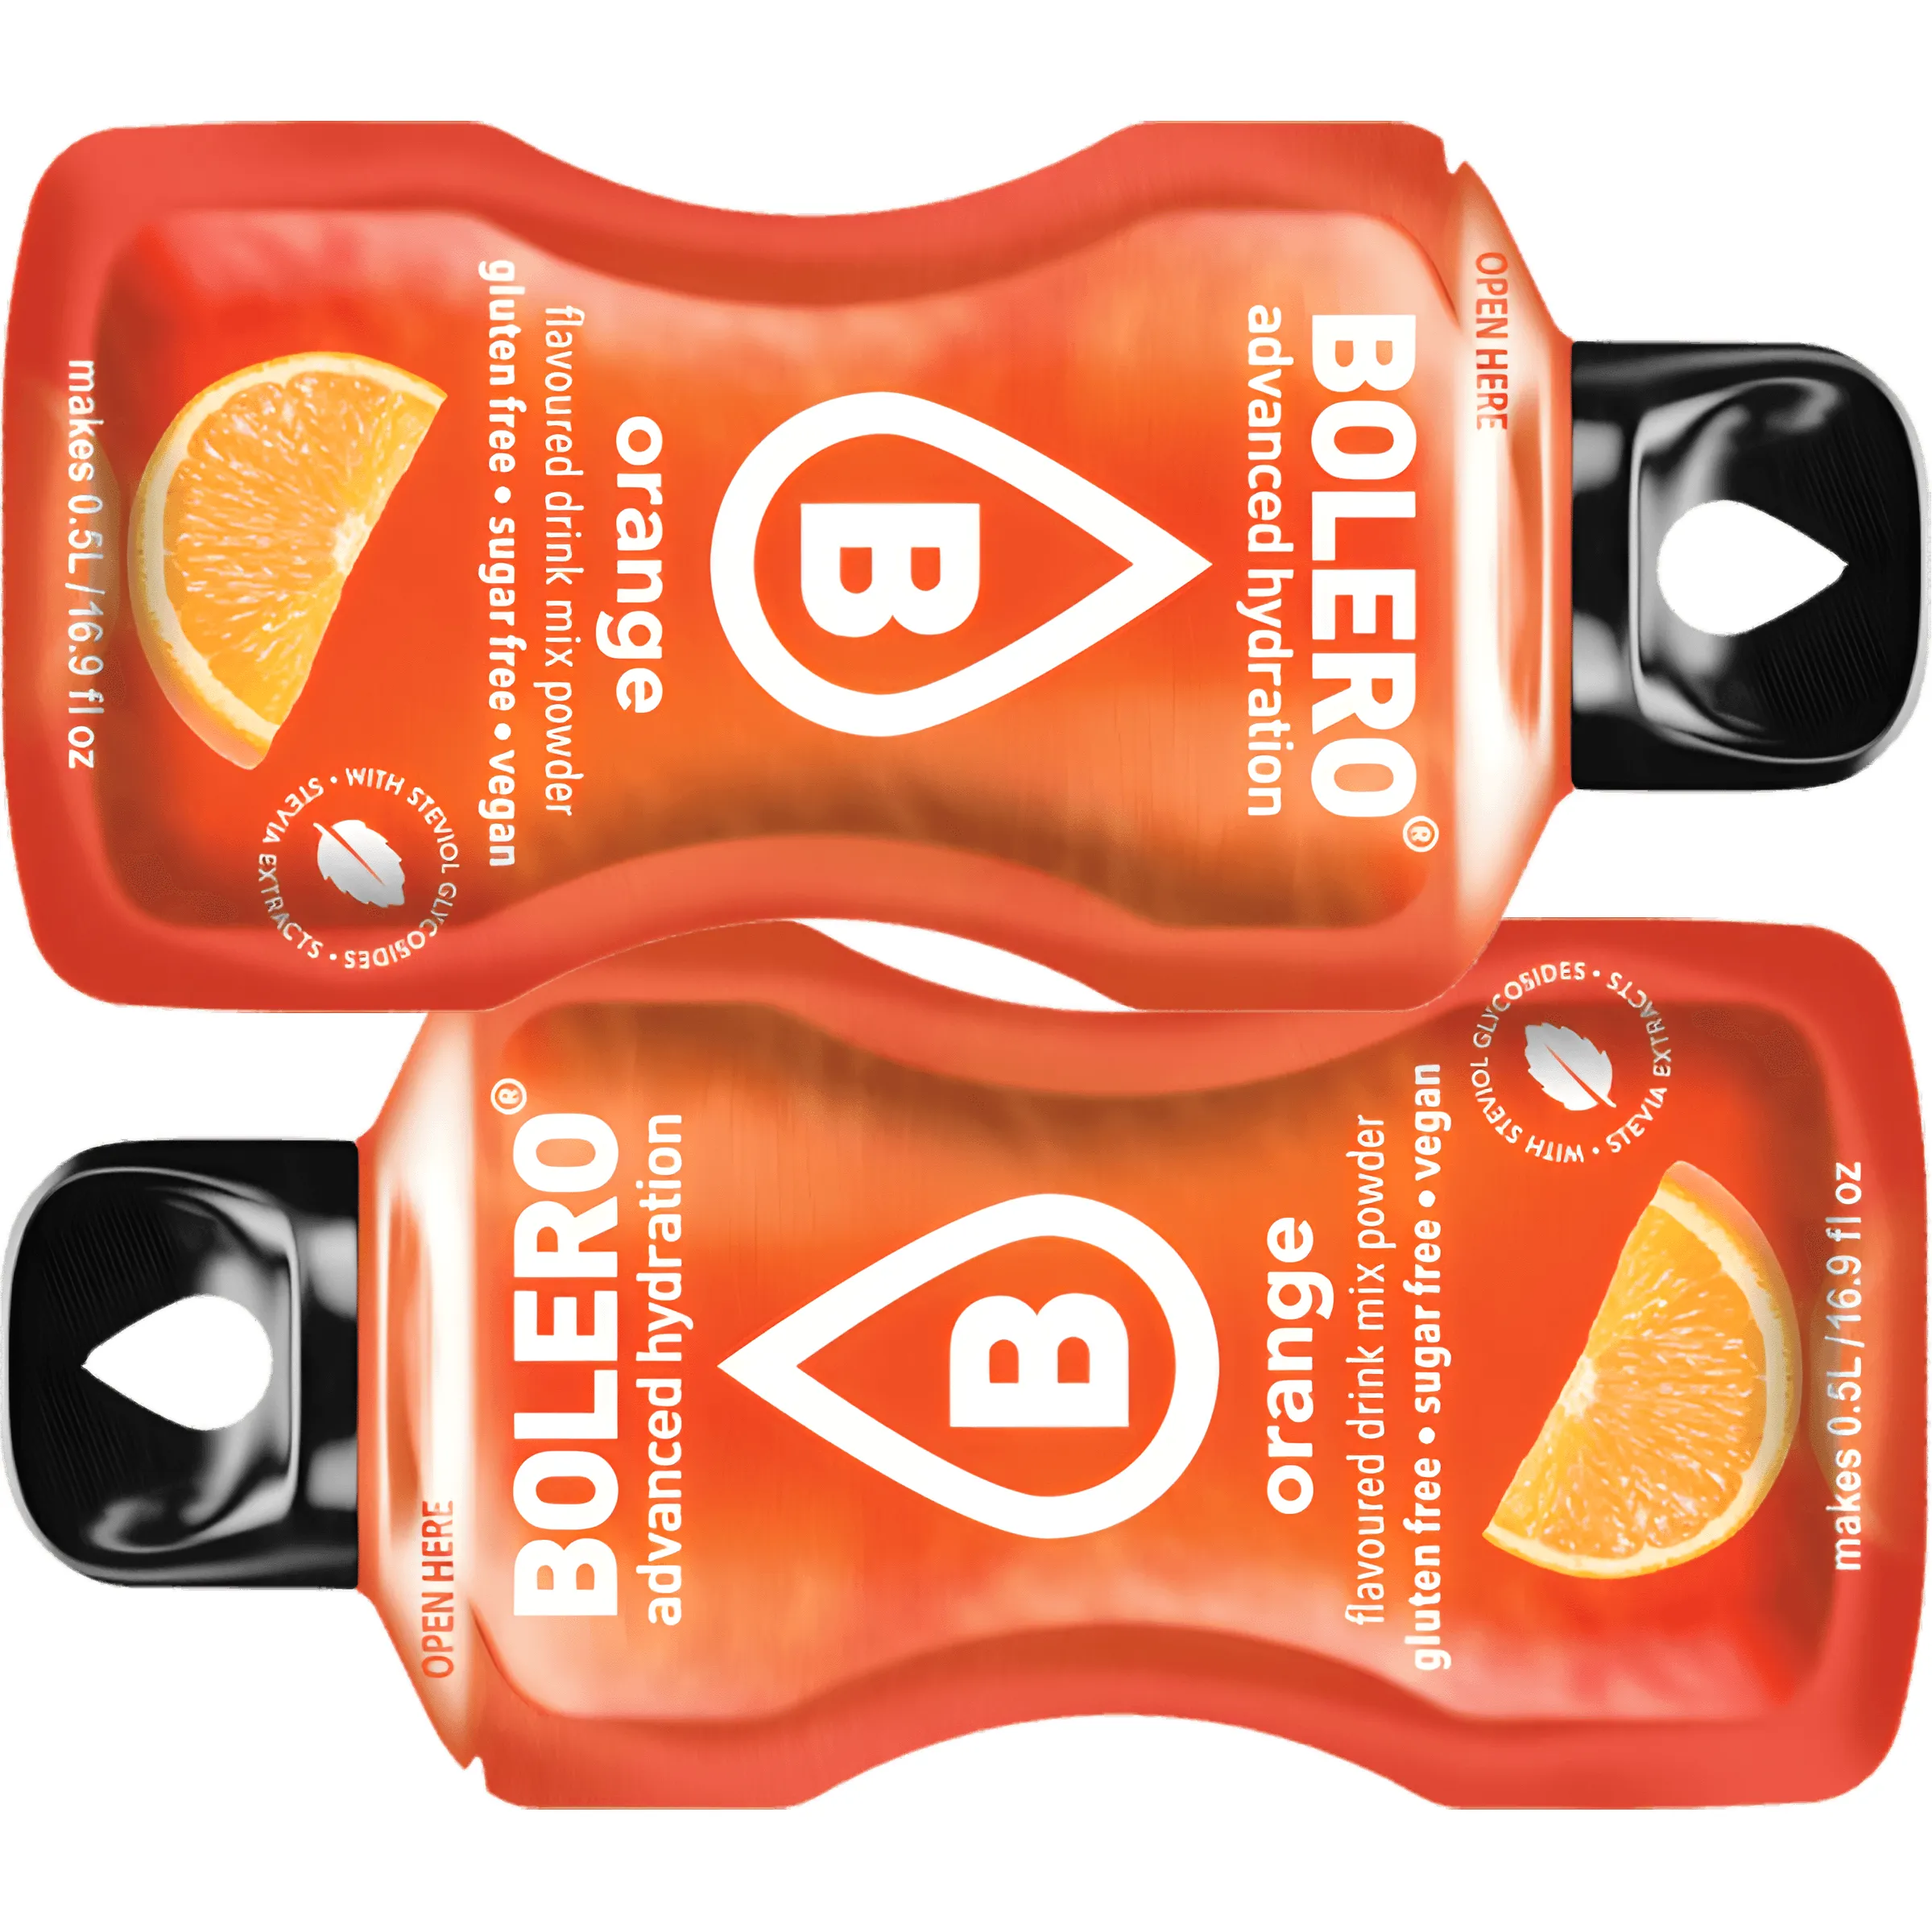 Free Bolero Orange Hydration Drinks